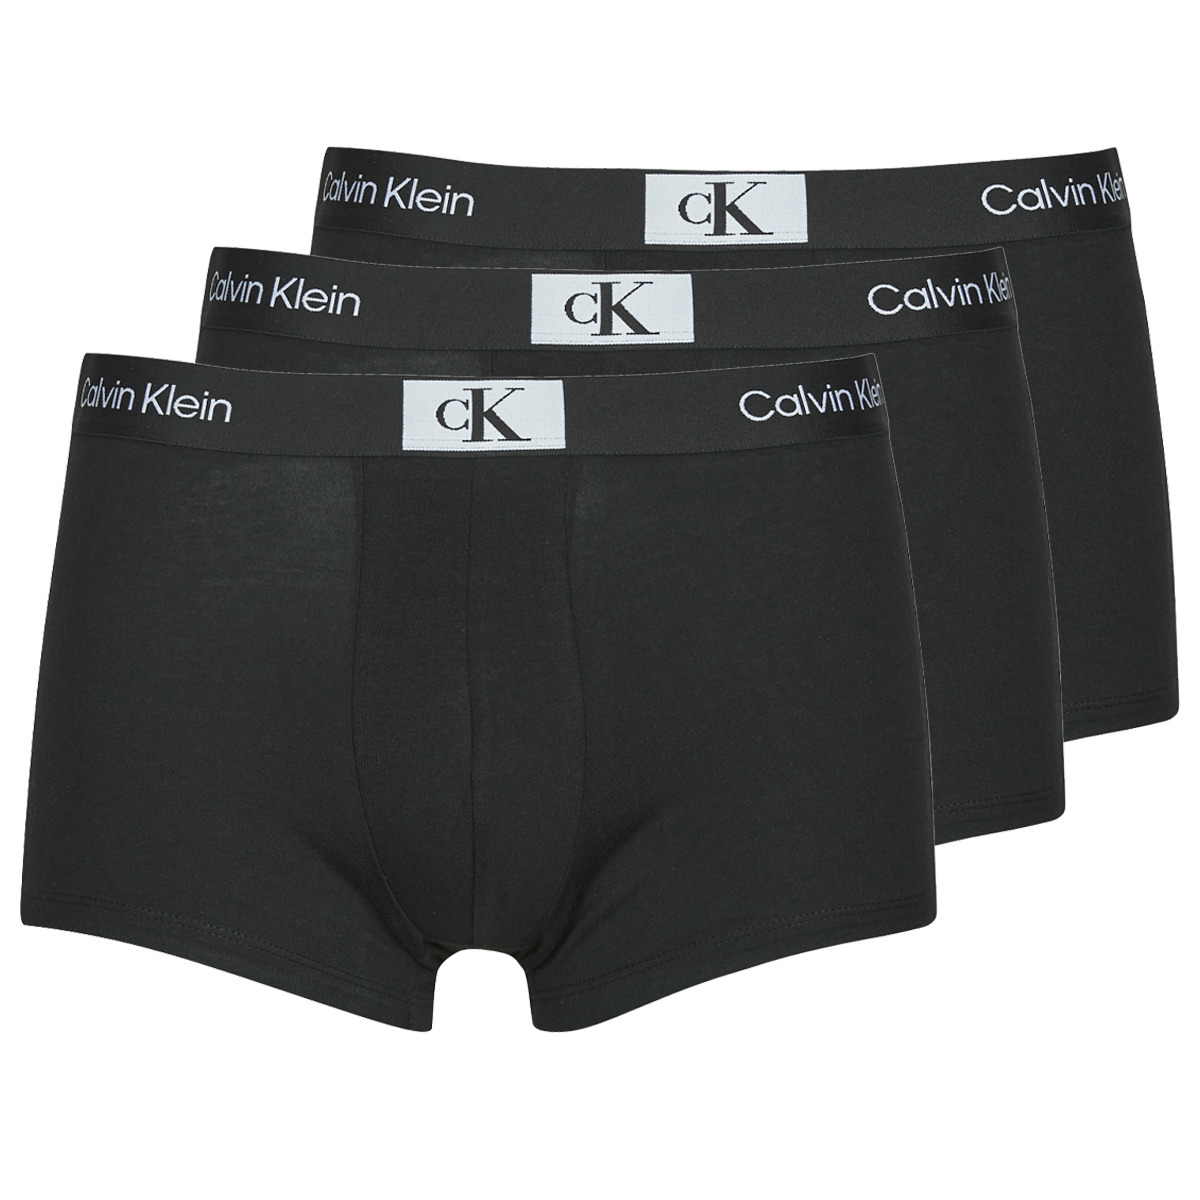 Calvin Klein Jeans Noir / Noir / Noir TRUNK 3PK X3 VtUe